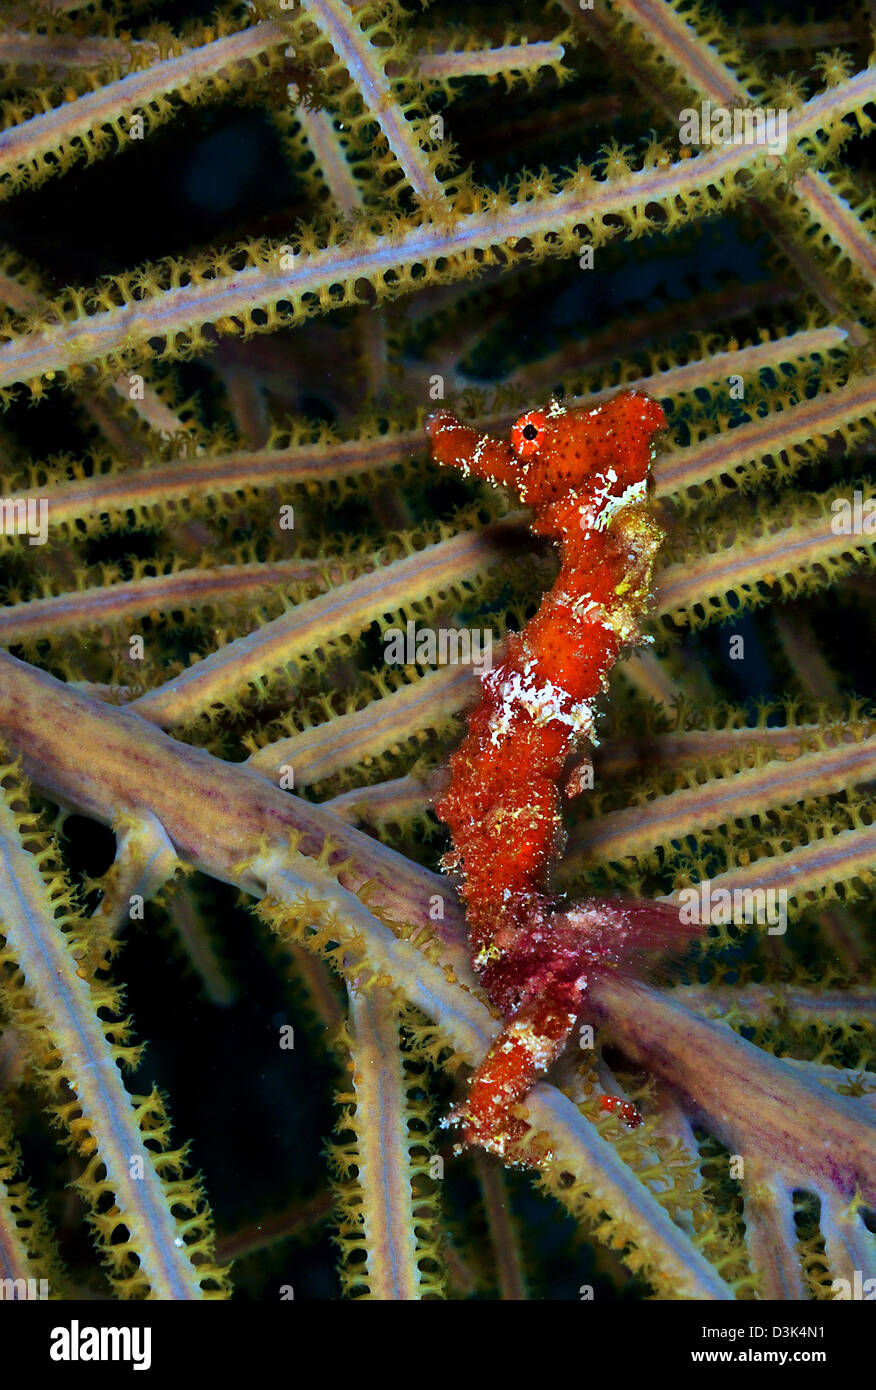 Caballito de Mar Rojo en arrecife caribeño. Foto de stock